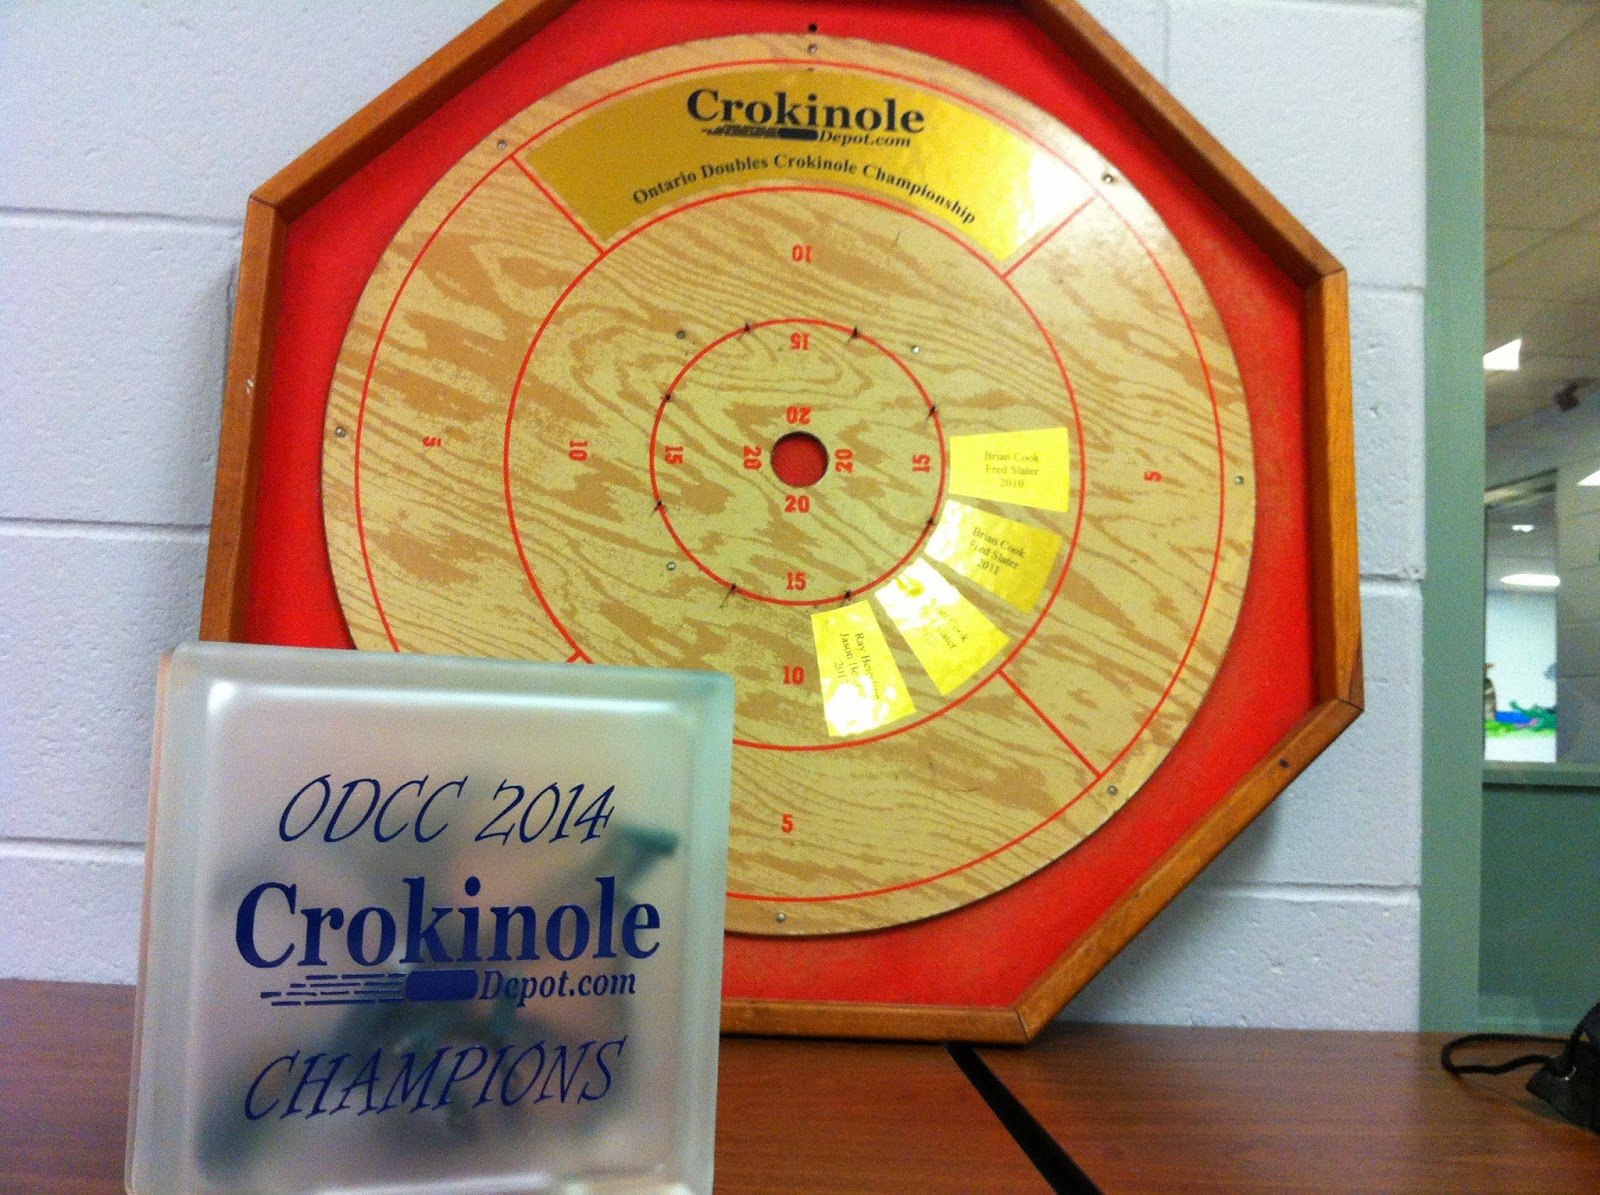 ODCC 2014 Crokinole Depot.com Champions